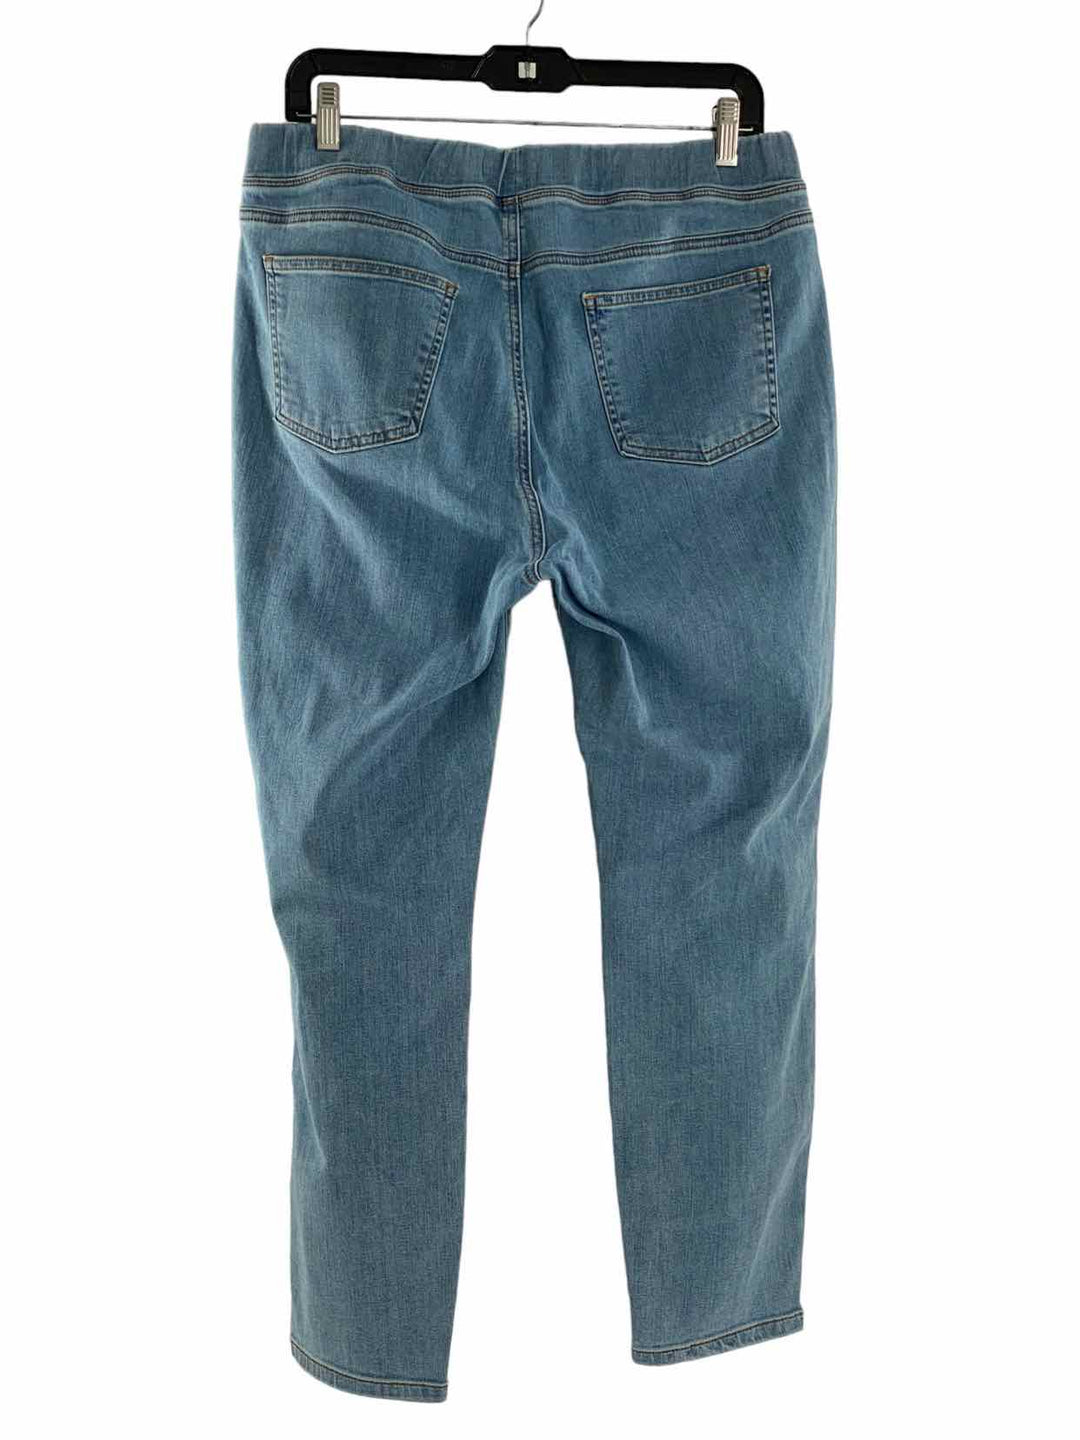 Eileen Fisher Size M Blue Denim Pants